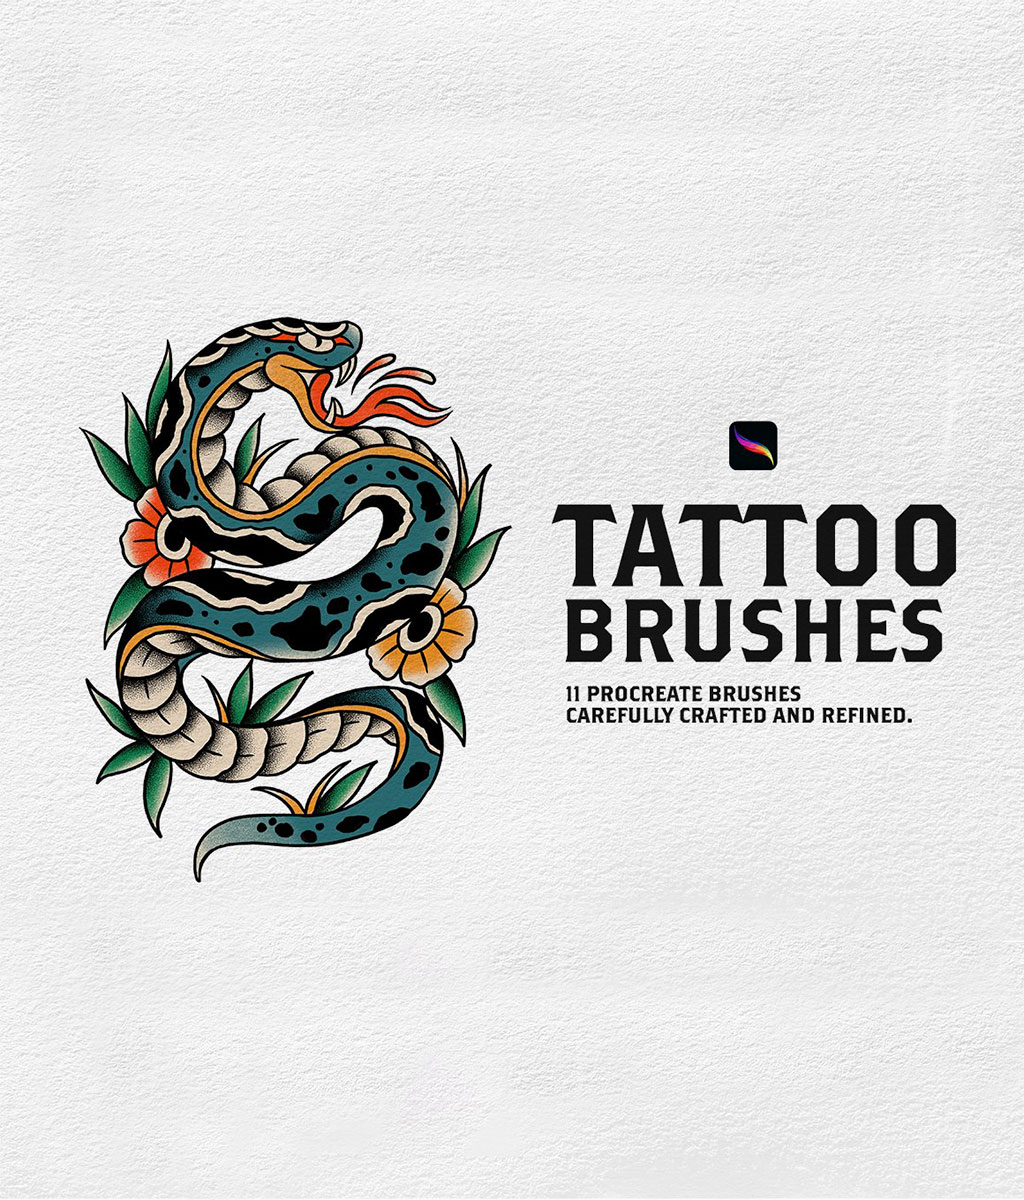 Procreate Tattoo Brushes